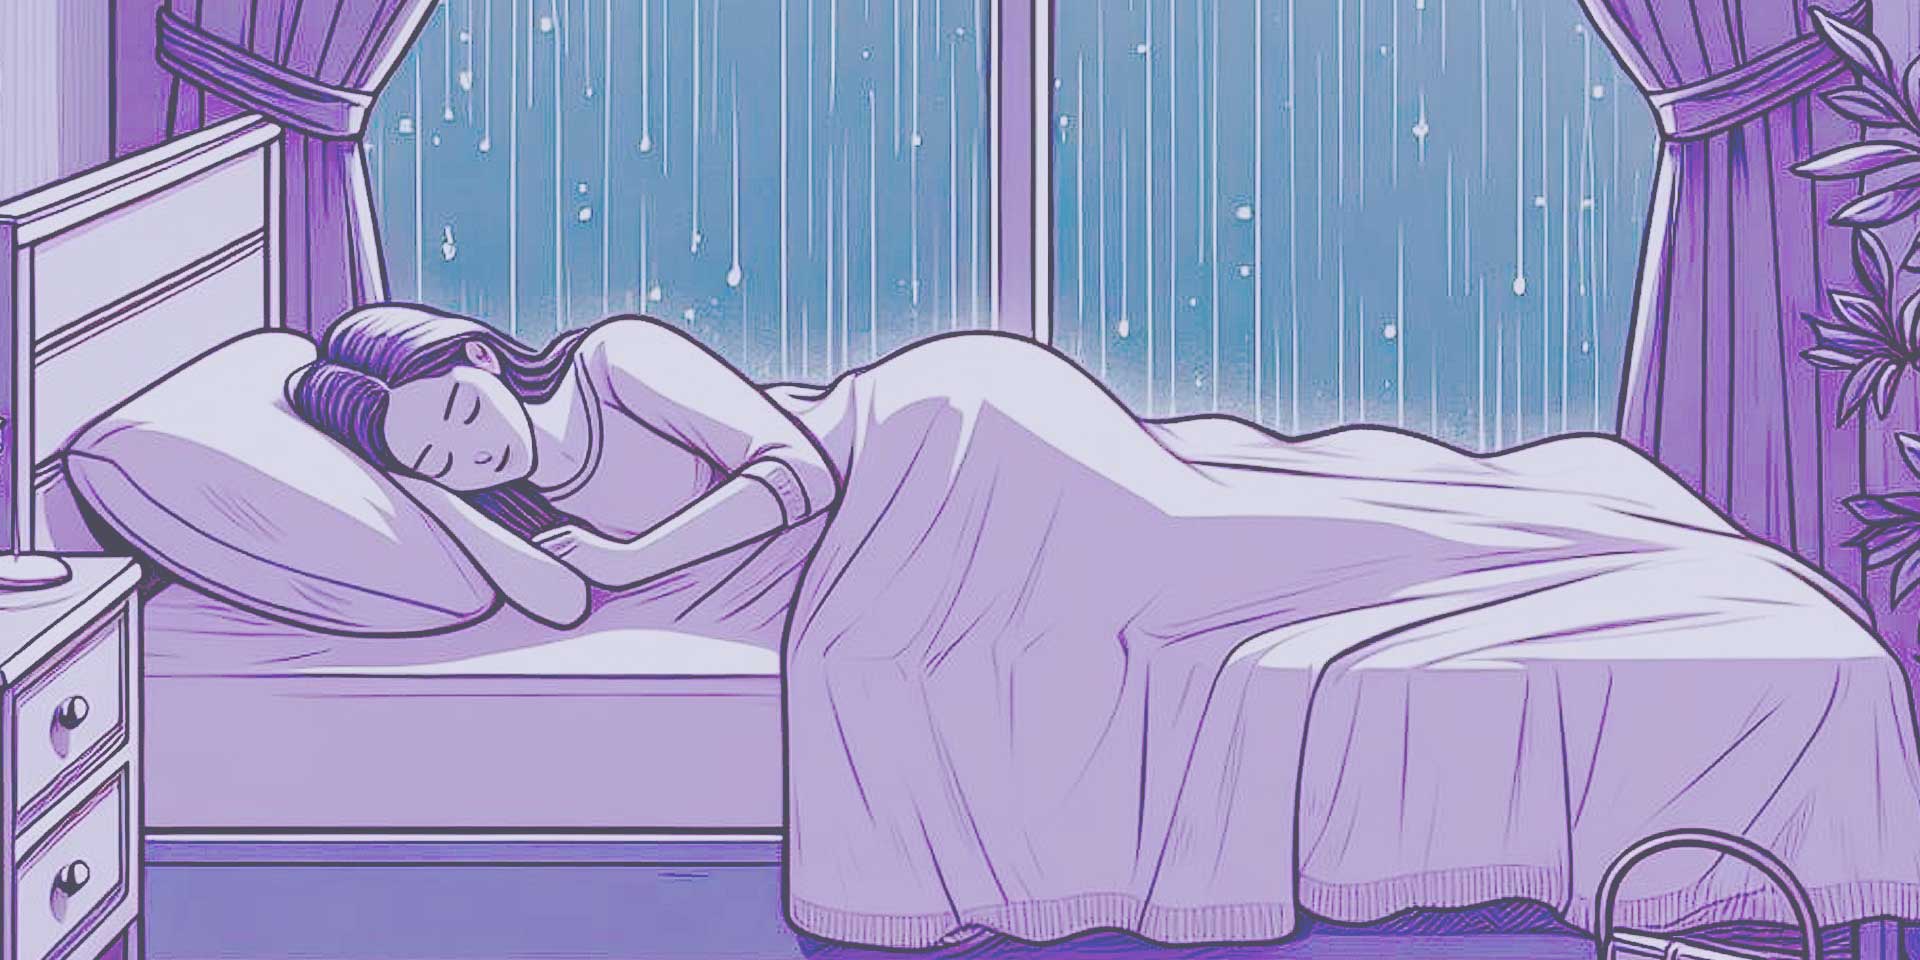 I’m sleeping in the rain